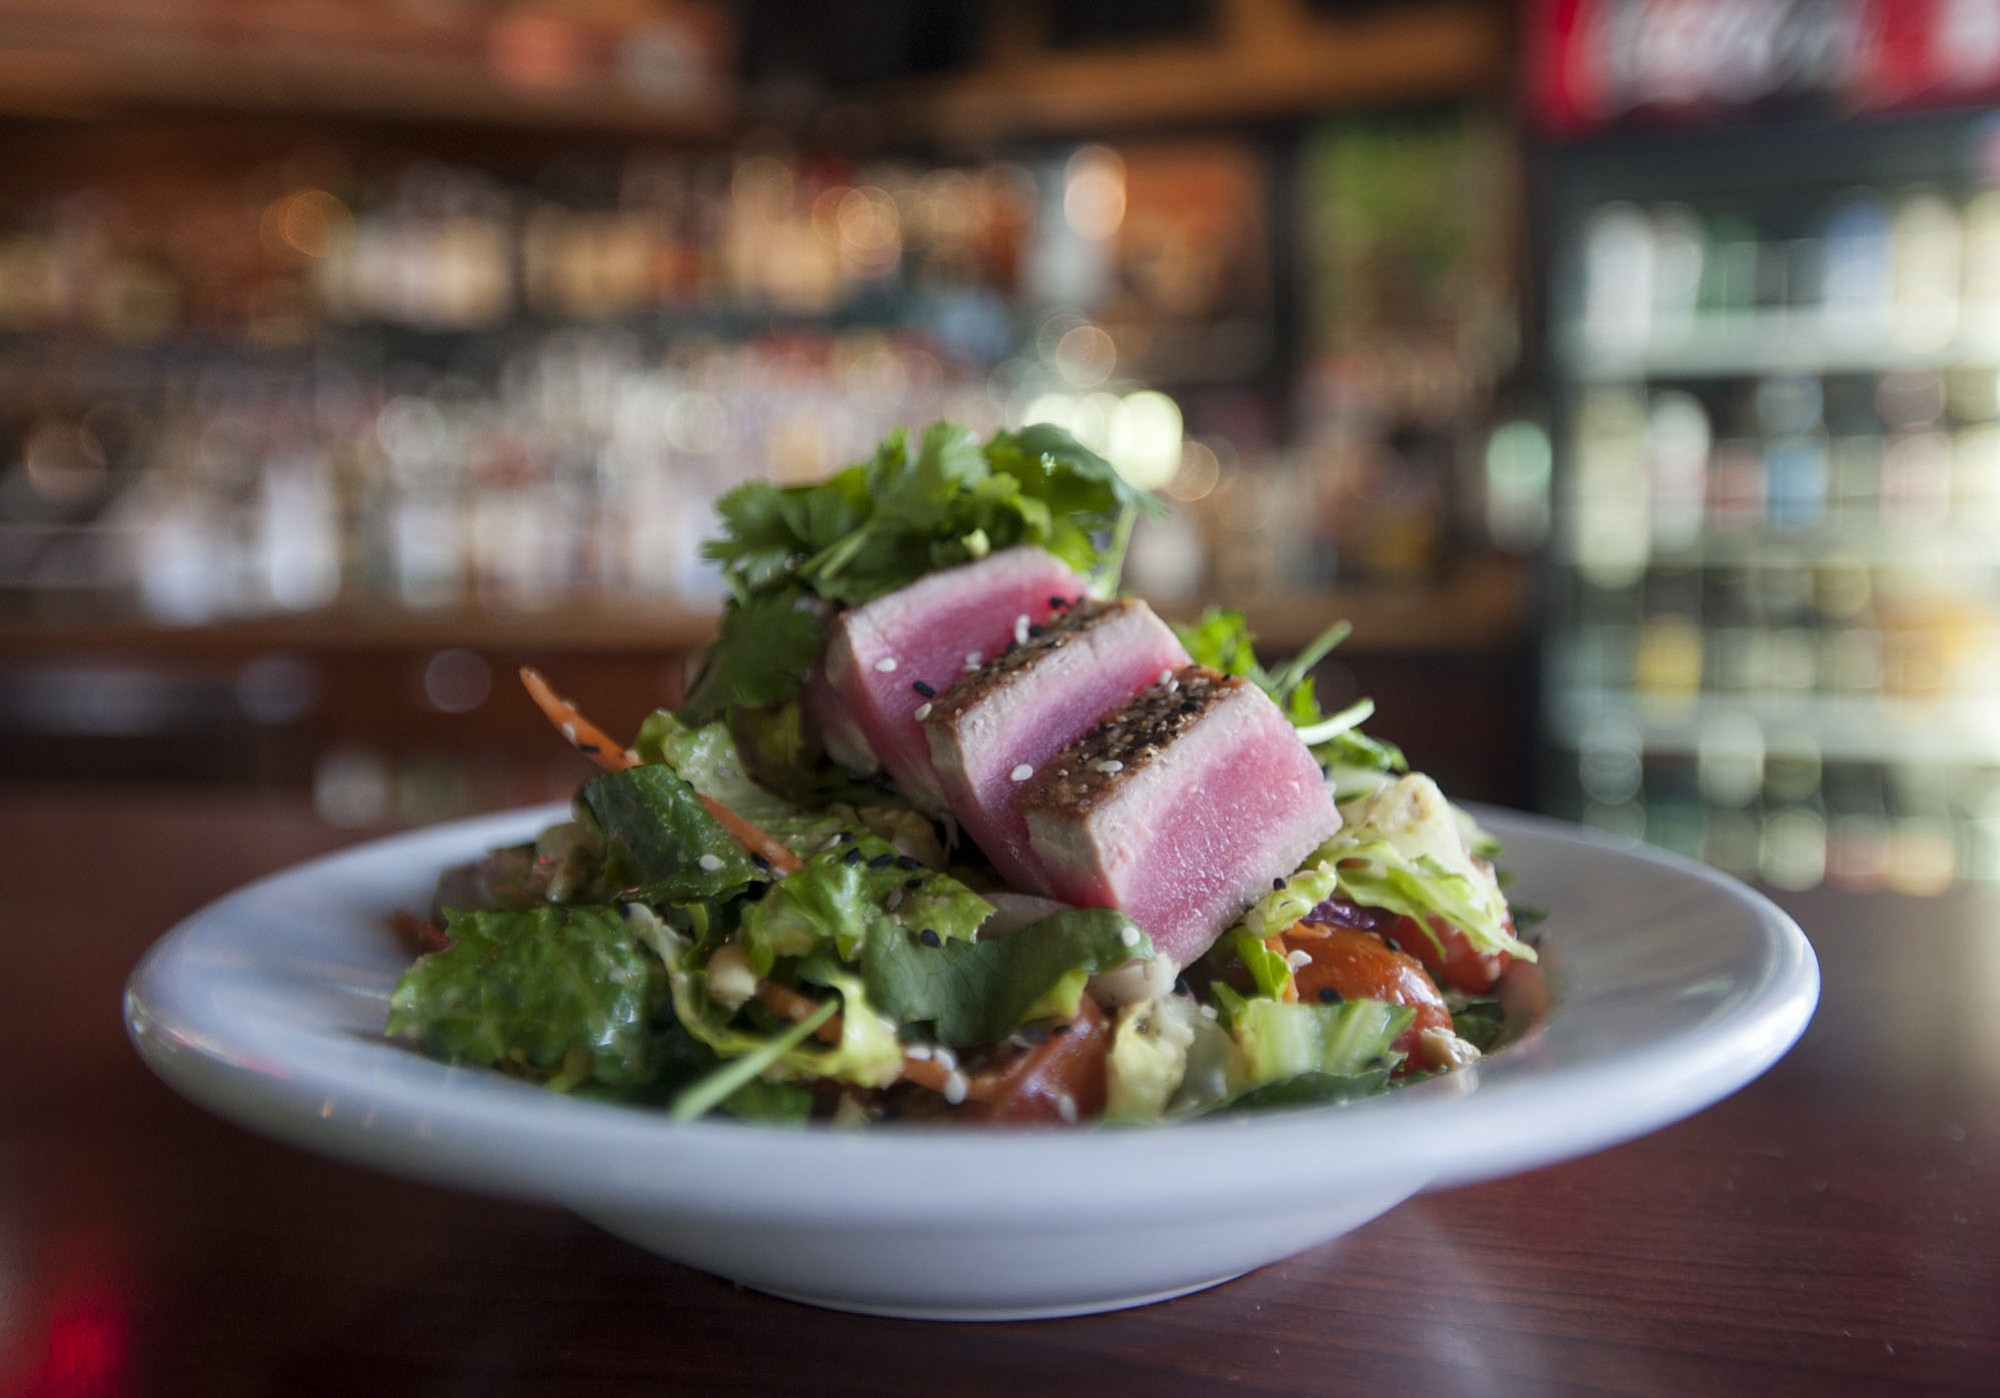 A Seared Ahi Tuna Salad is among the menu items at Shanahan's Pub